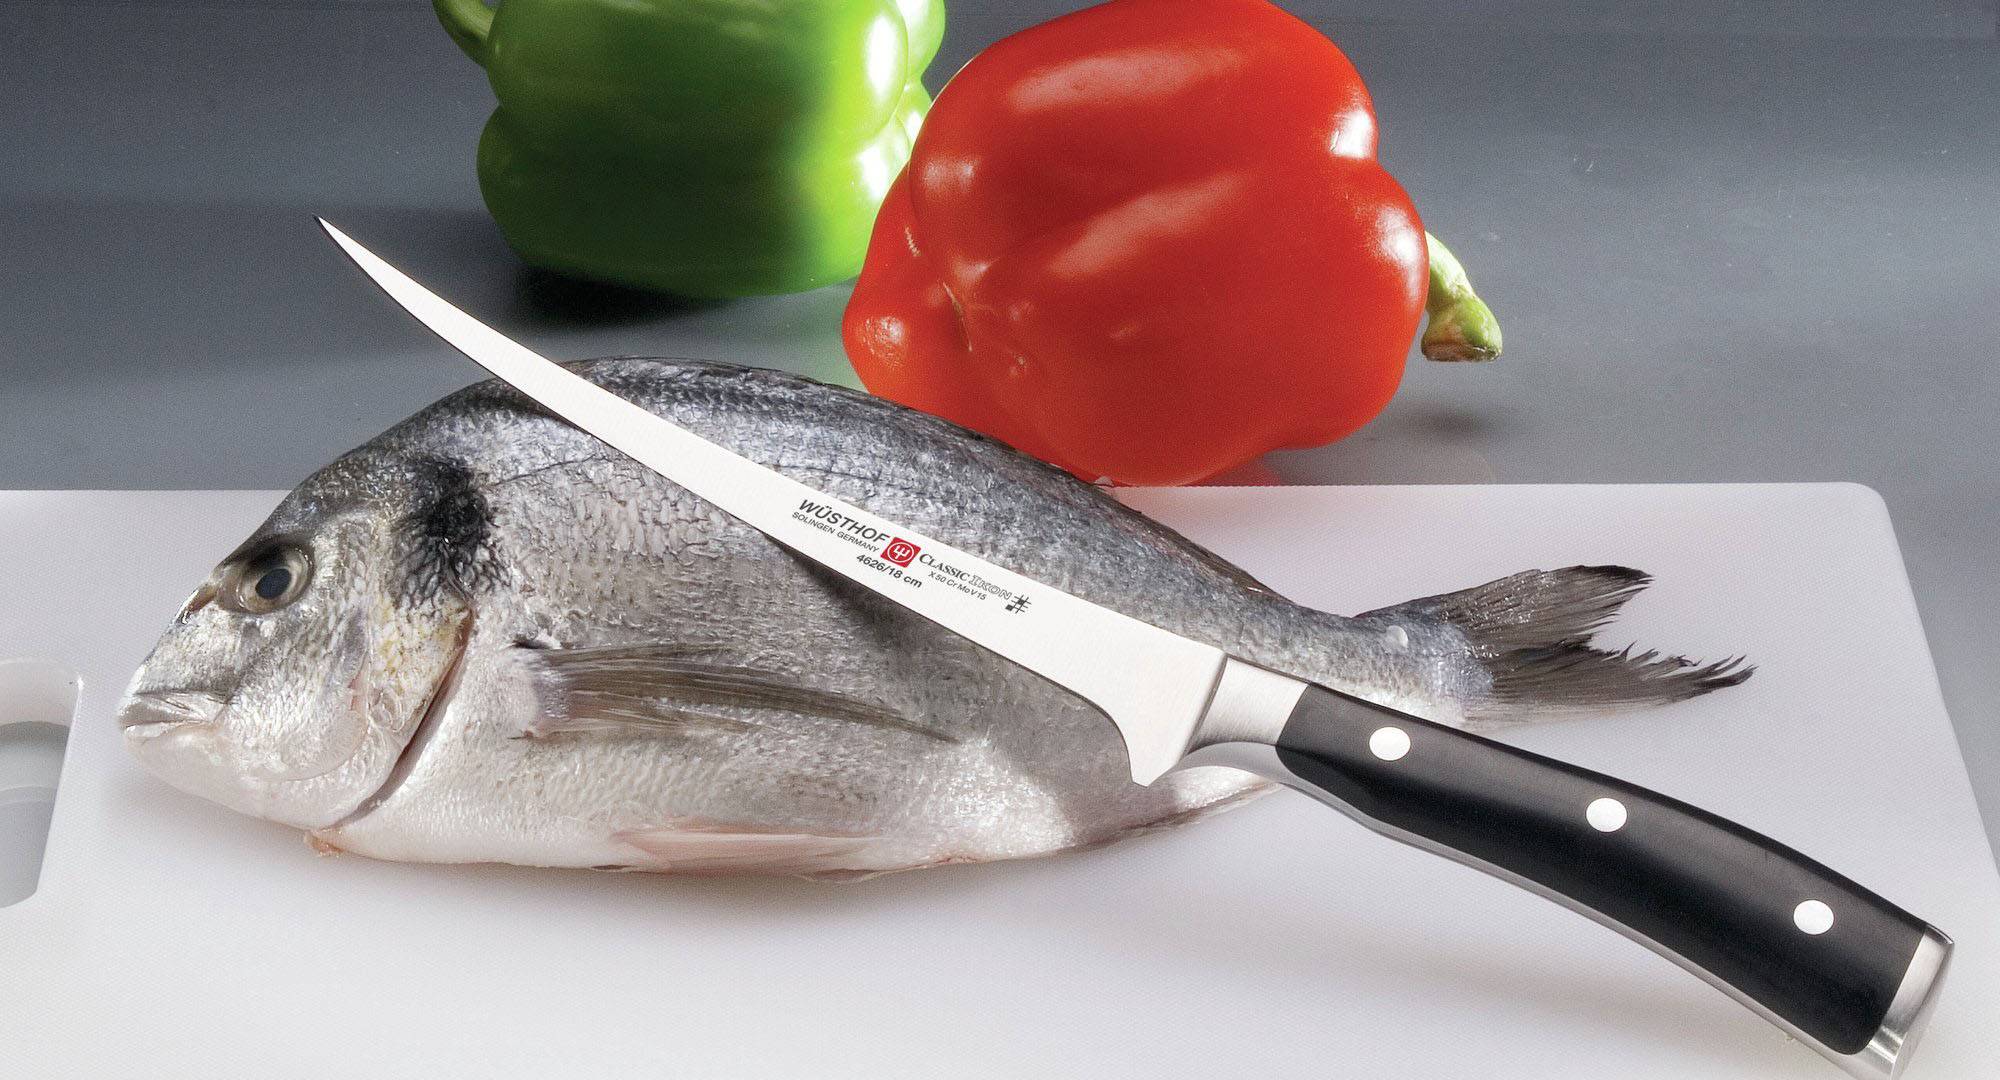 Какая рыба нож. Рыба нож. Нож для рыбы разделочный. Нож рыбный филейный. Нож для филе рыбы.